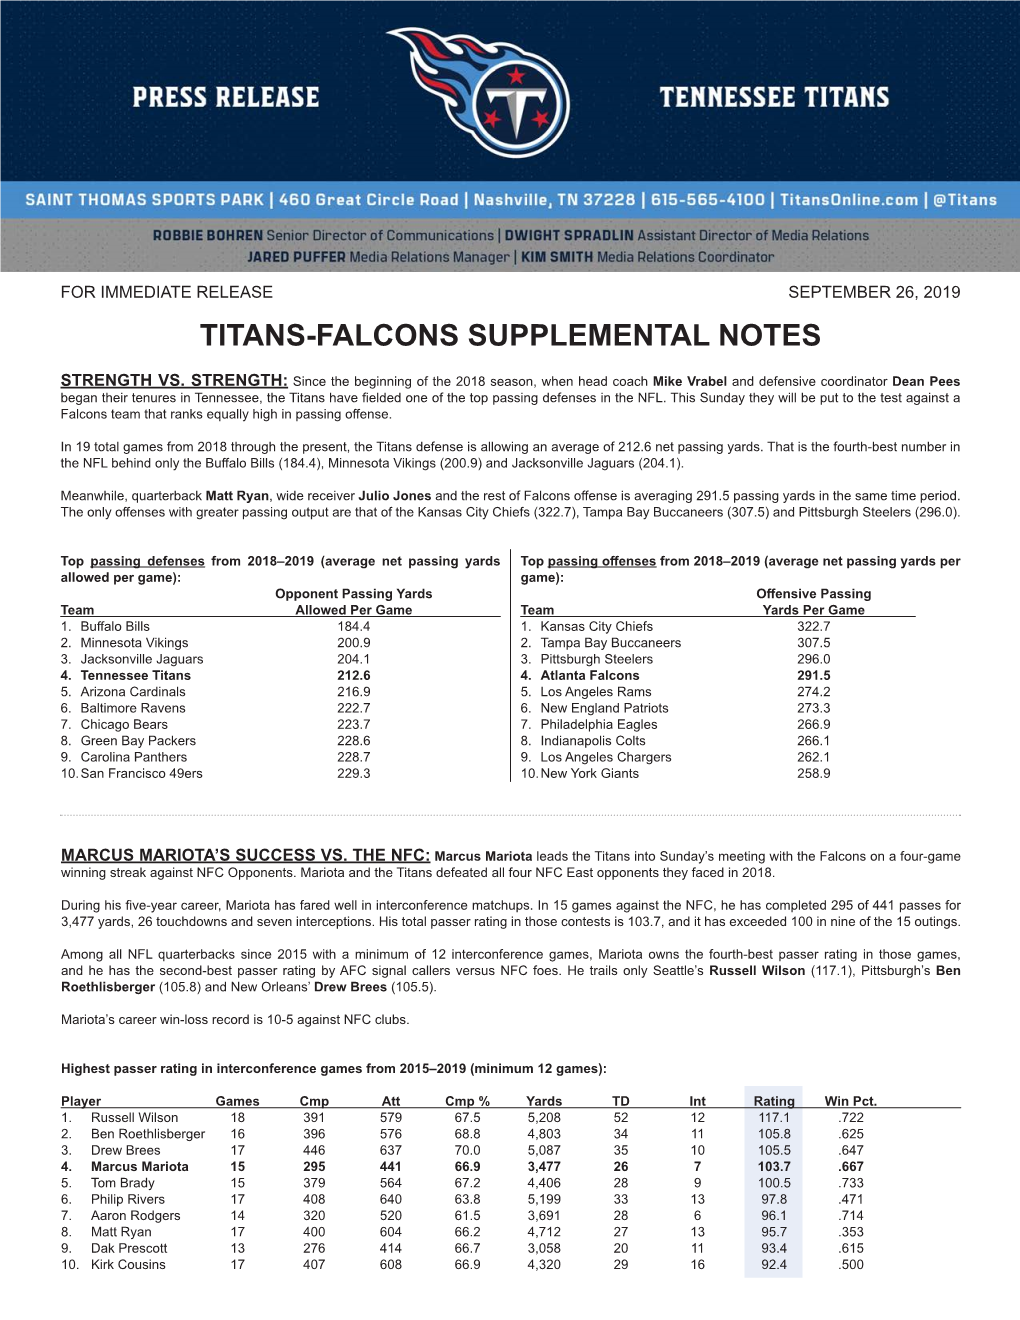 Titans-Falcons Supplemental Notes